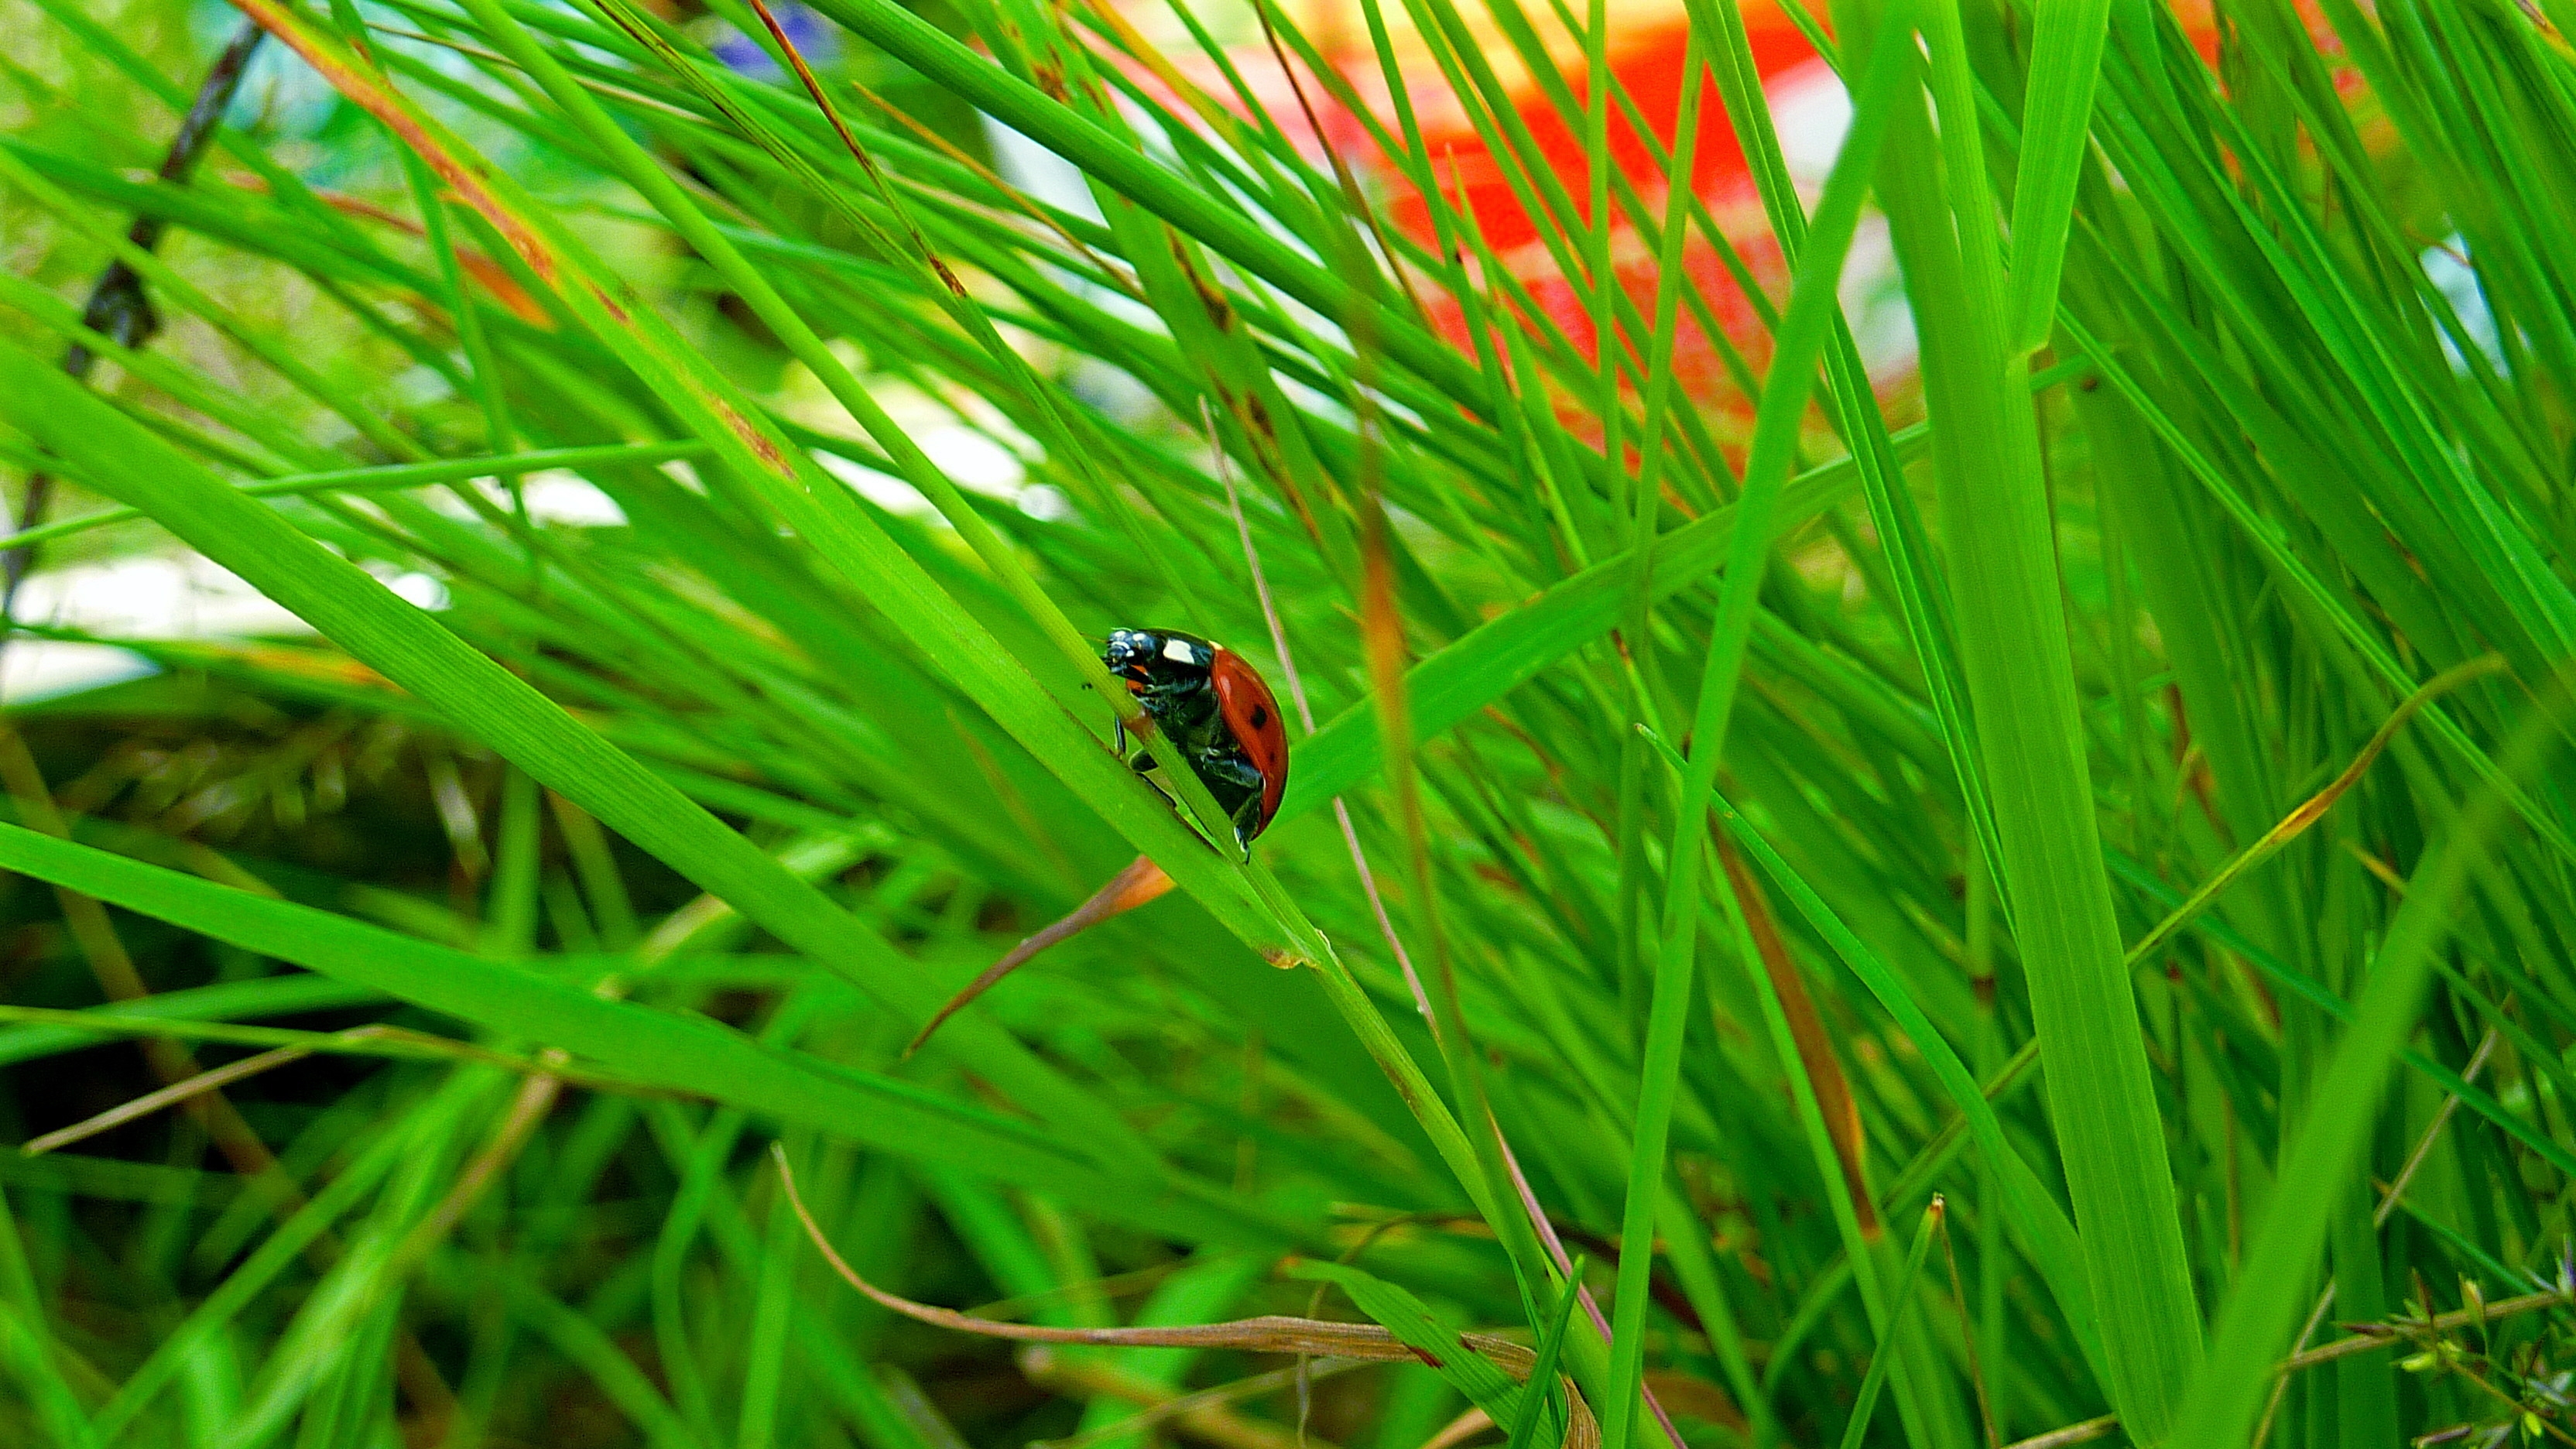 A ladybug crawls through the green grass.